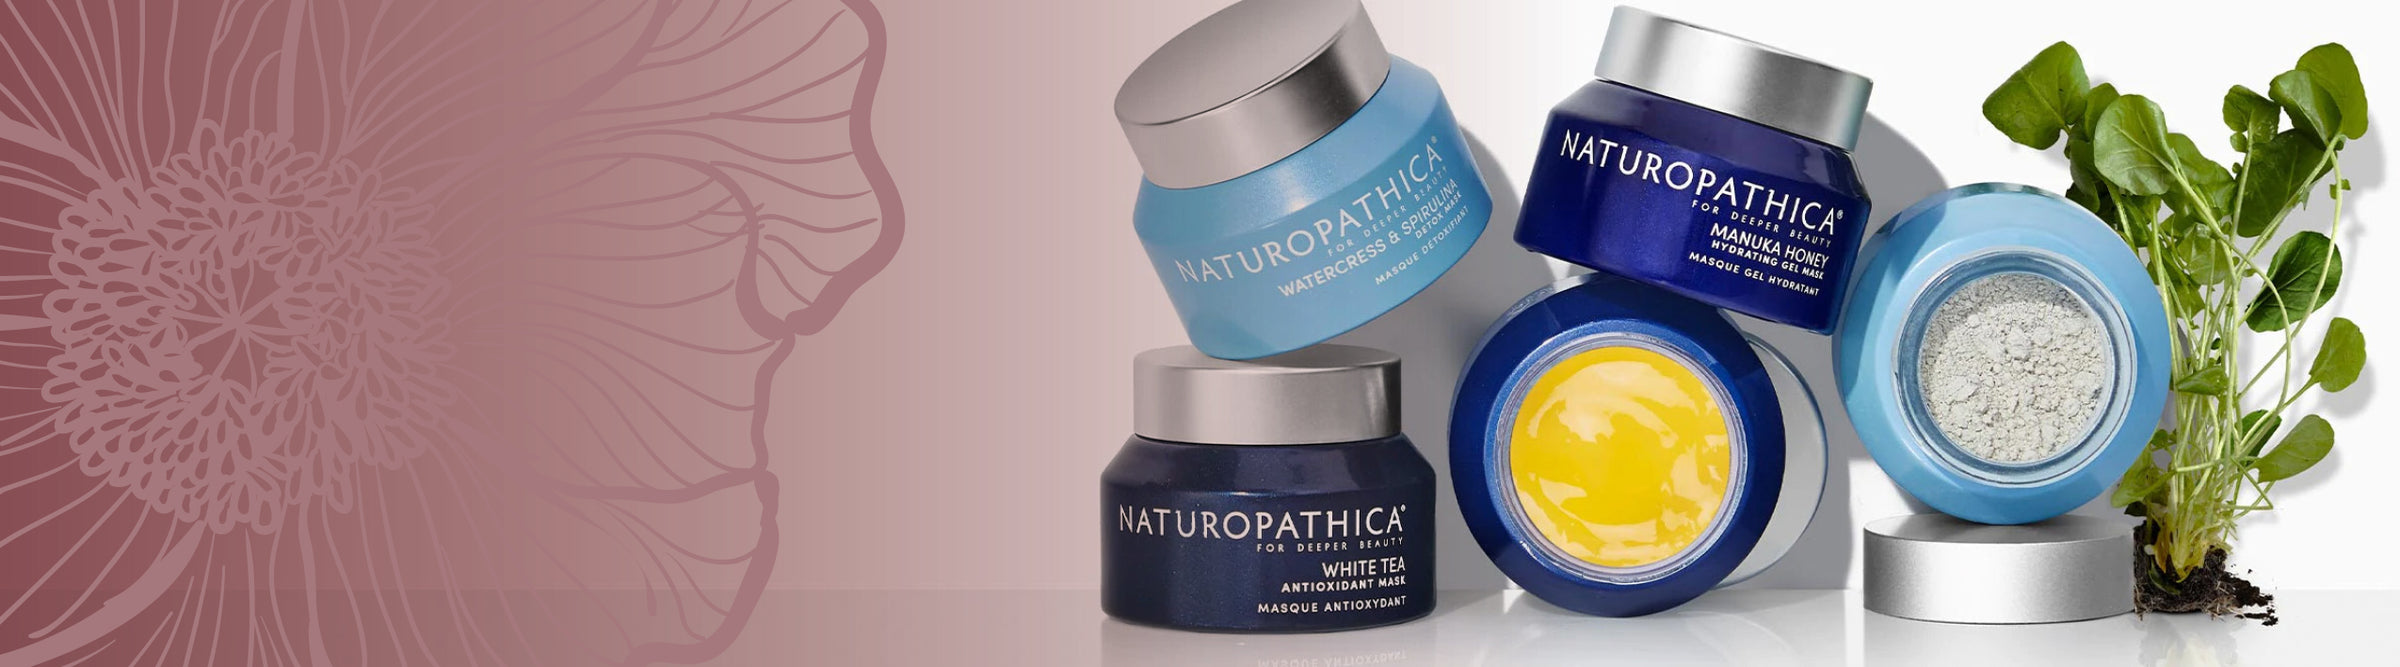 Naturopathica - Masks & Treatments